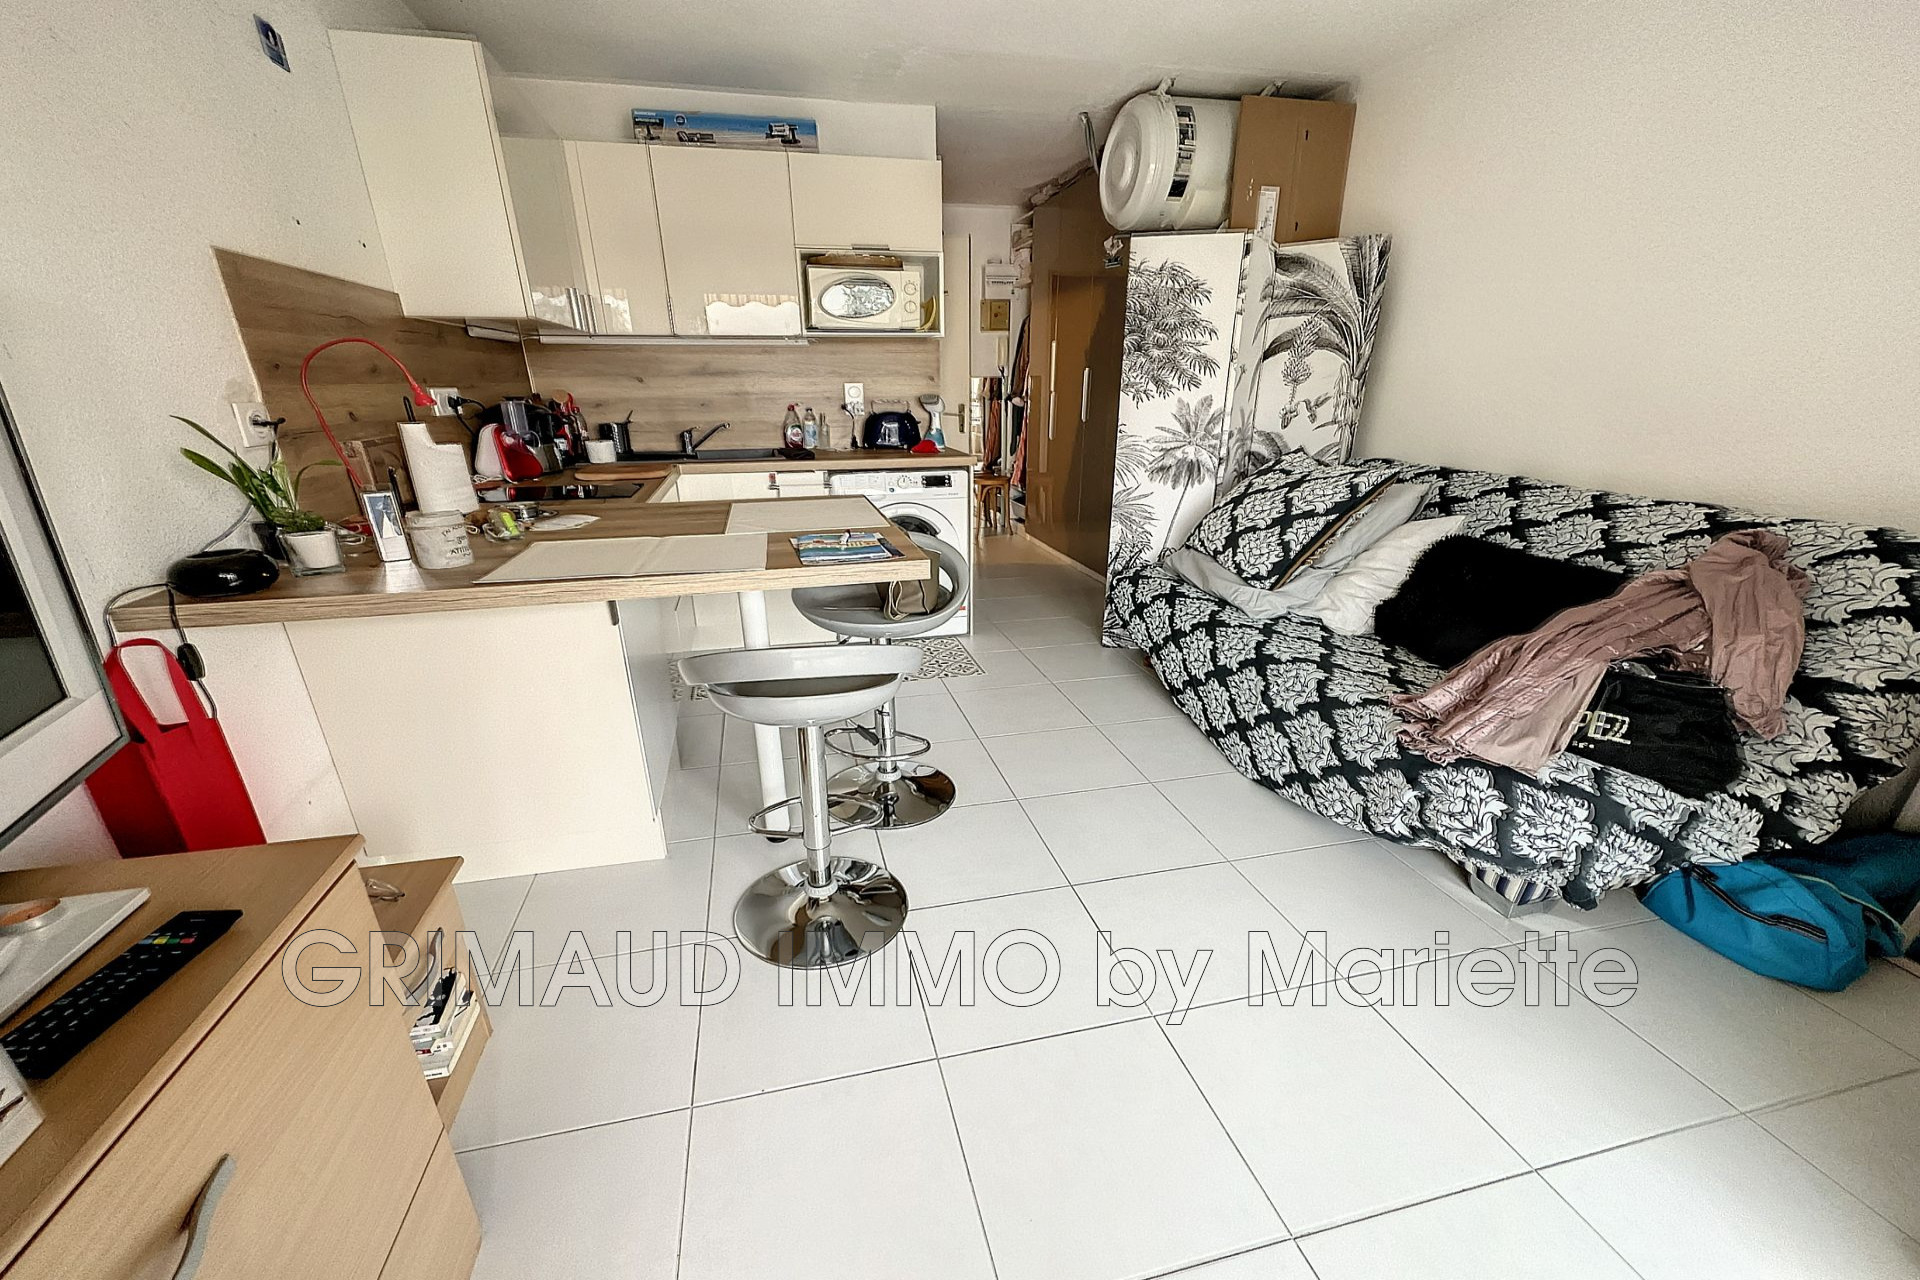 Vente Appartement 19m² à Sainte-Maxime (83120) - Grimaud Immo